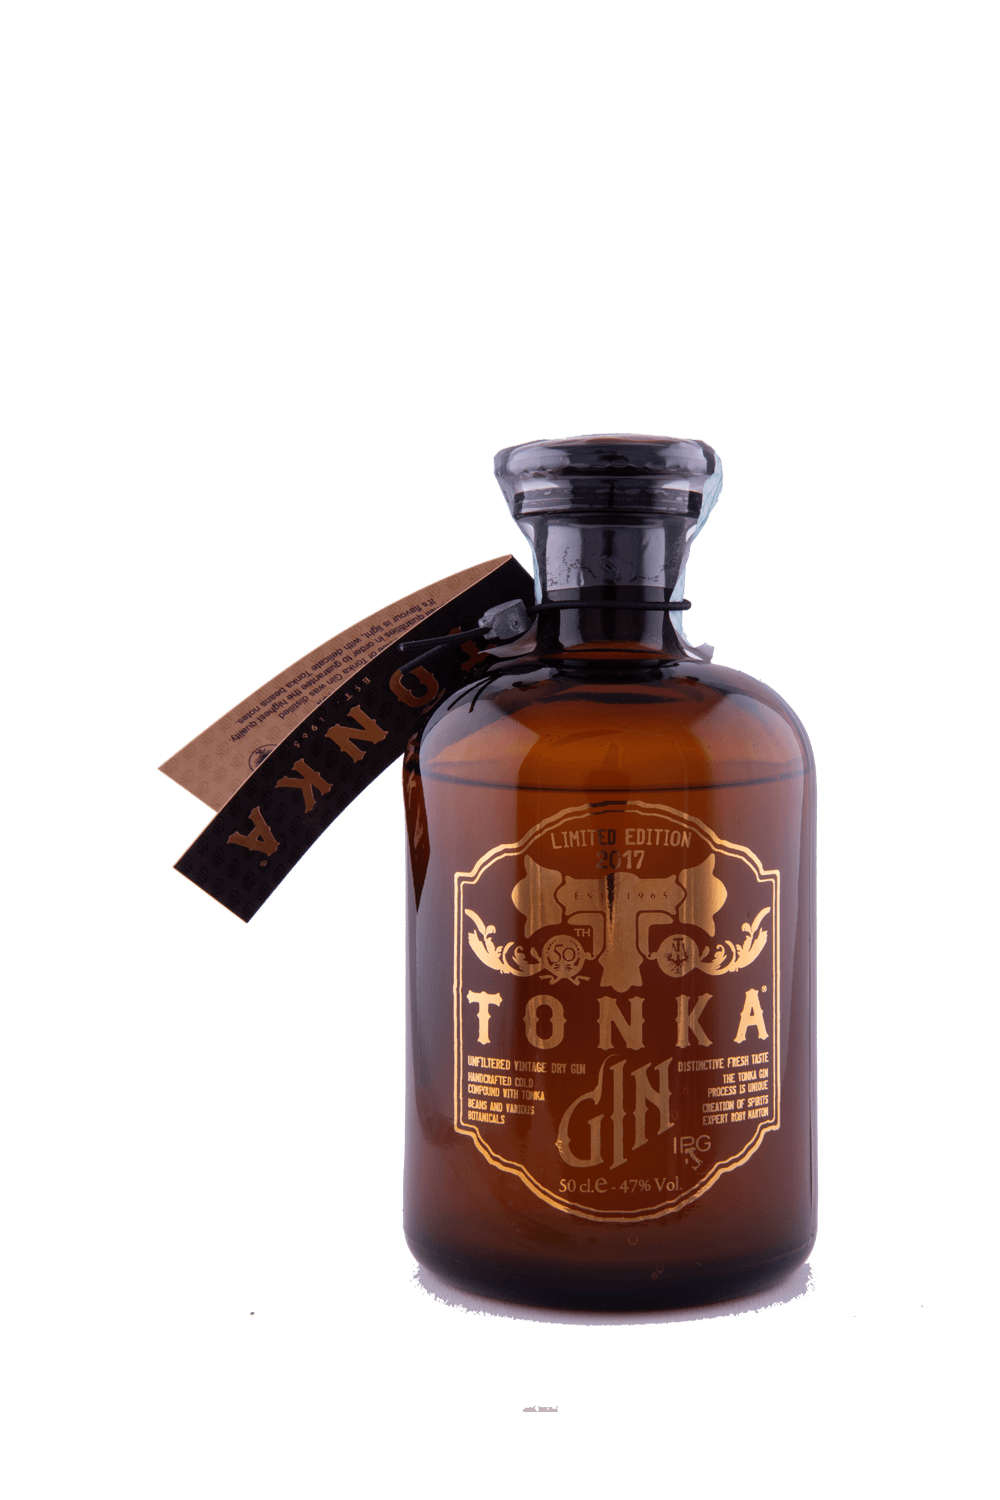 Tonka Gin Limited Edition 47% vol. Gin